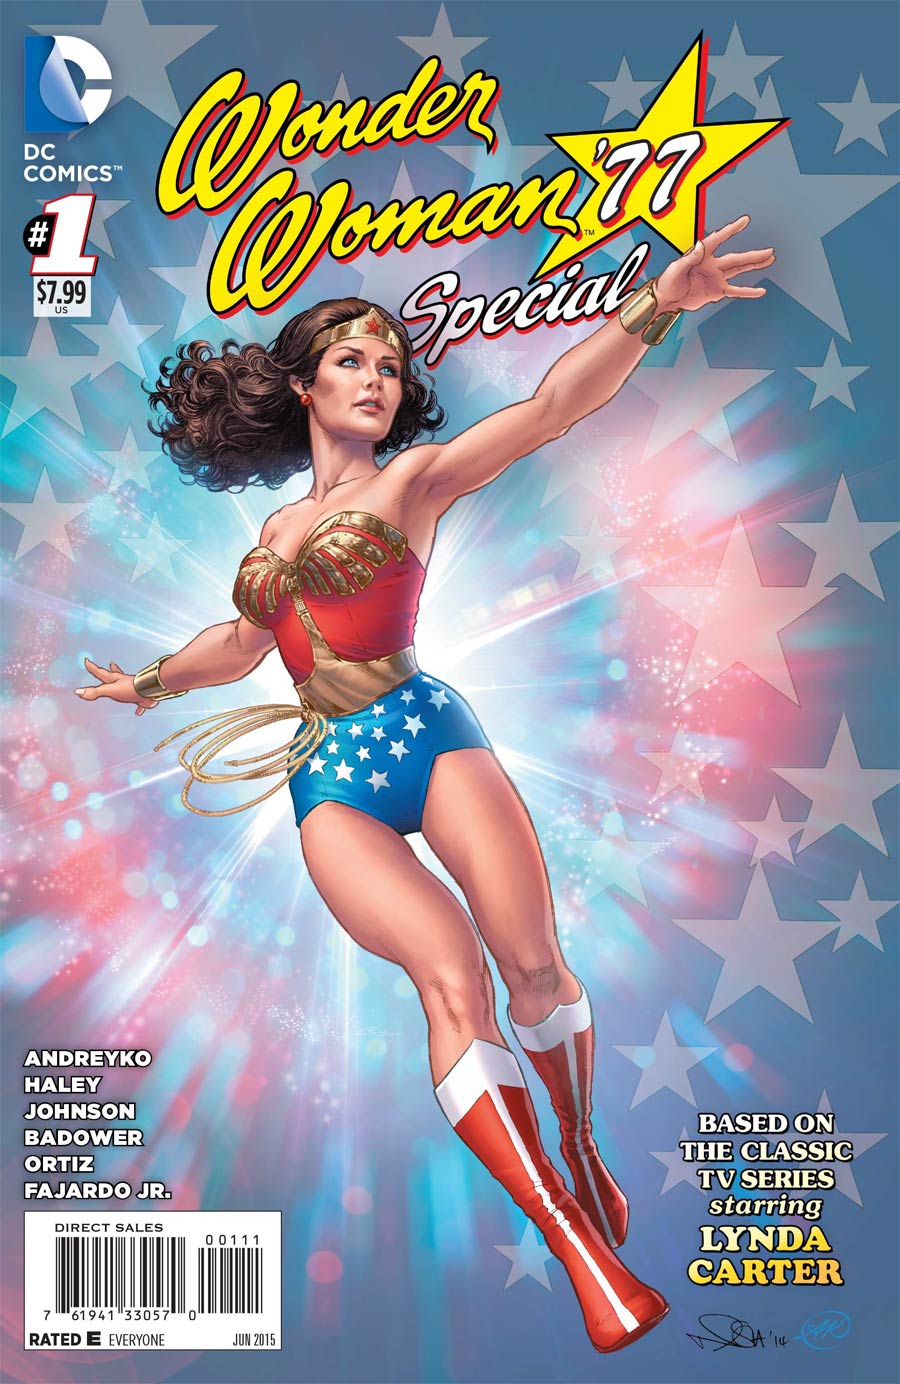 Wonder Woman 77 Special #1 Cover A Regular Nicola Scott Cover